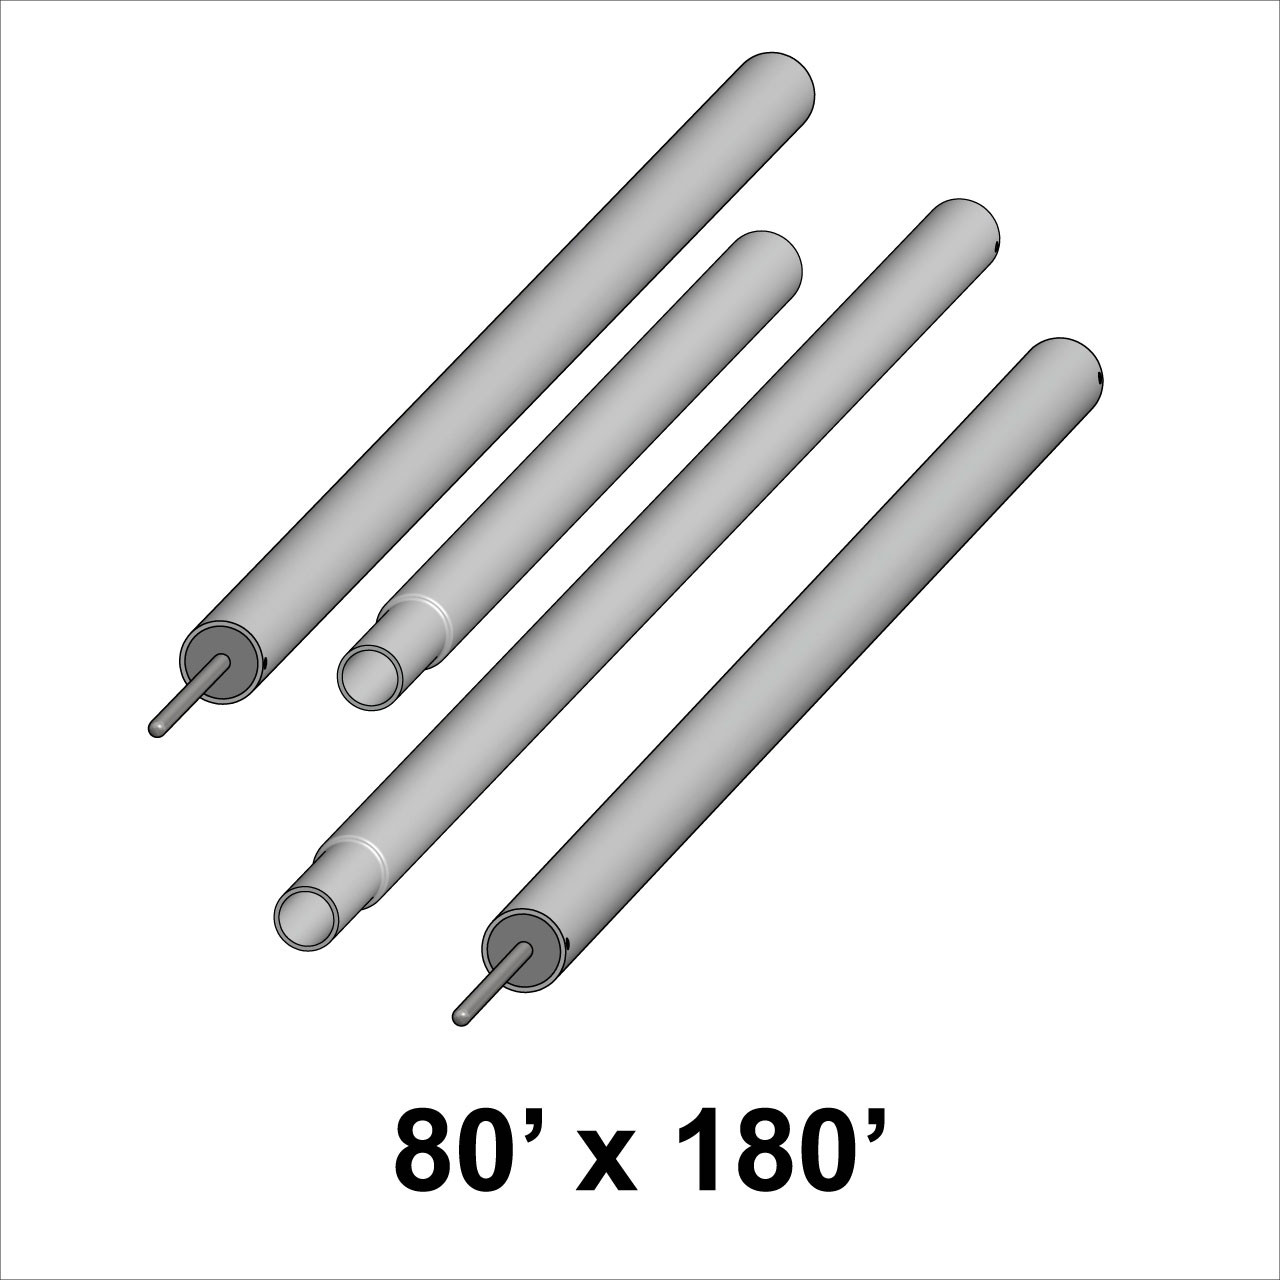 80' x 180' Classic Series Pole Kit